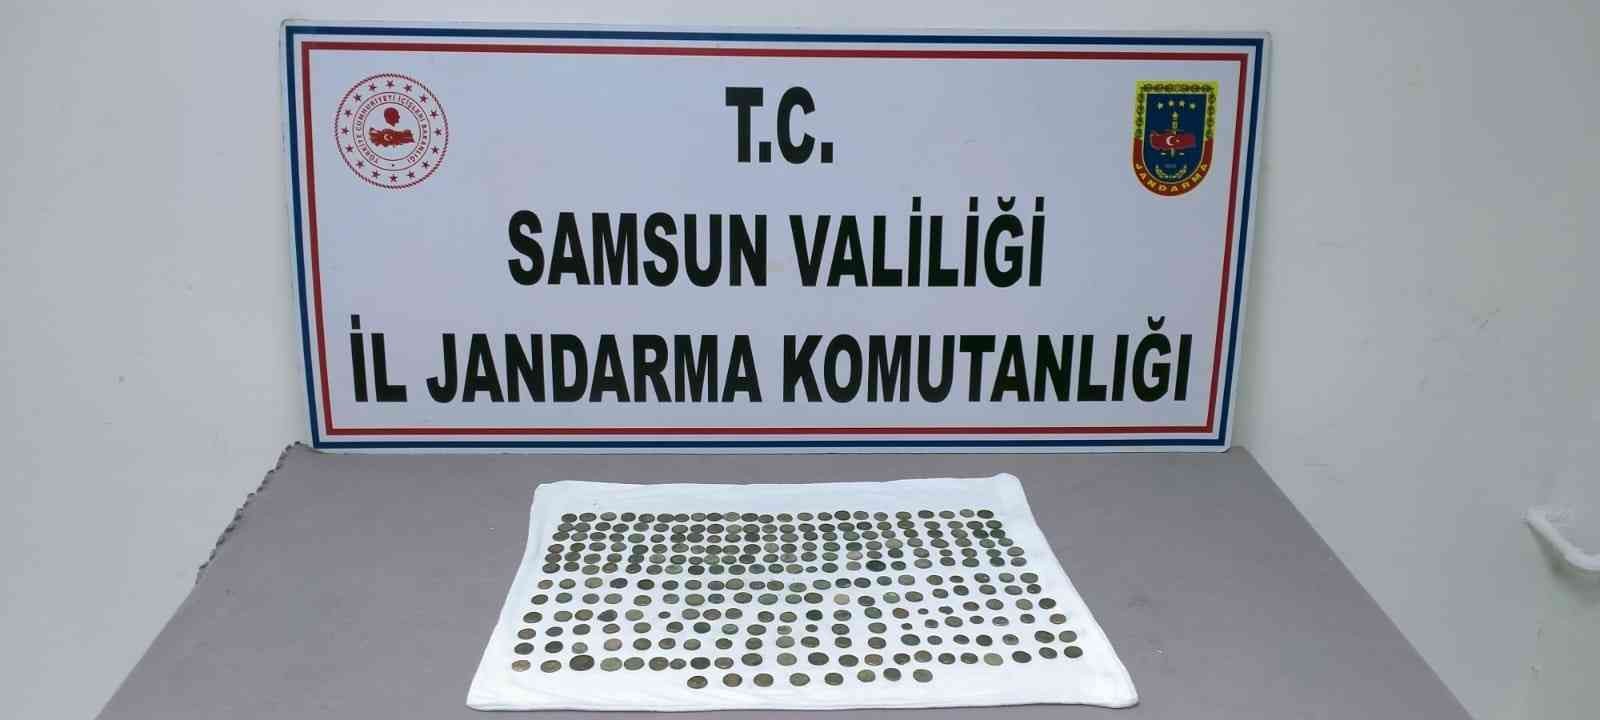 Samsun'da jandarma 265 adet sikke ele geçirdi
